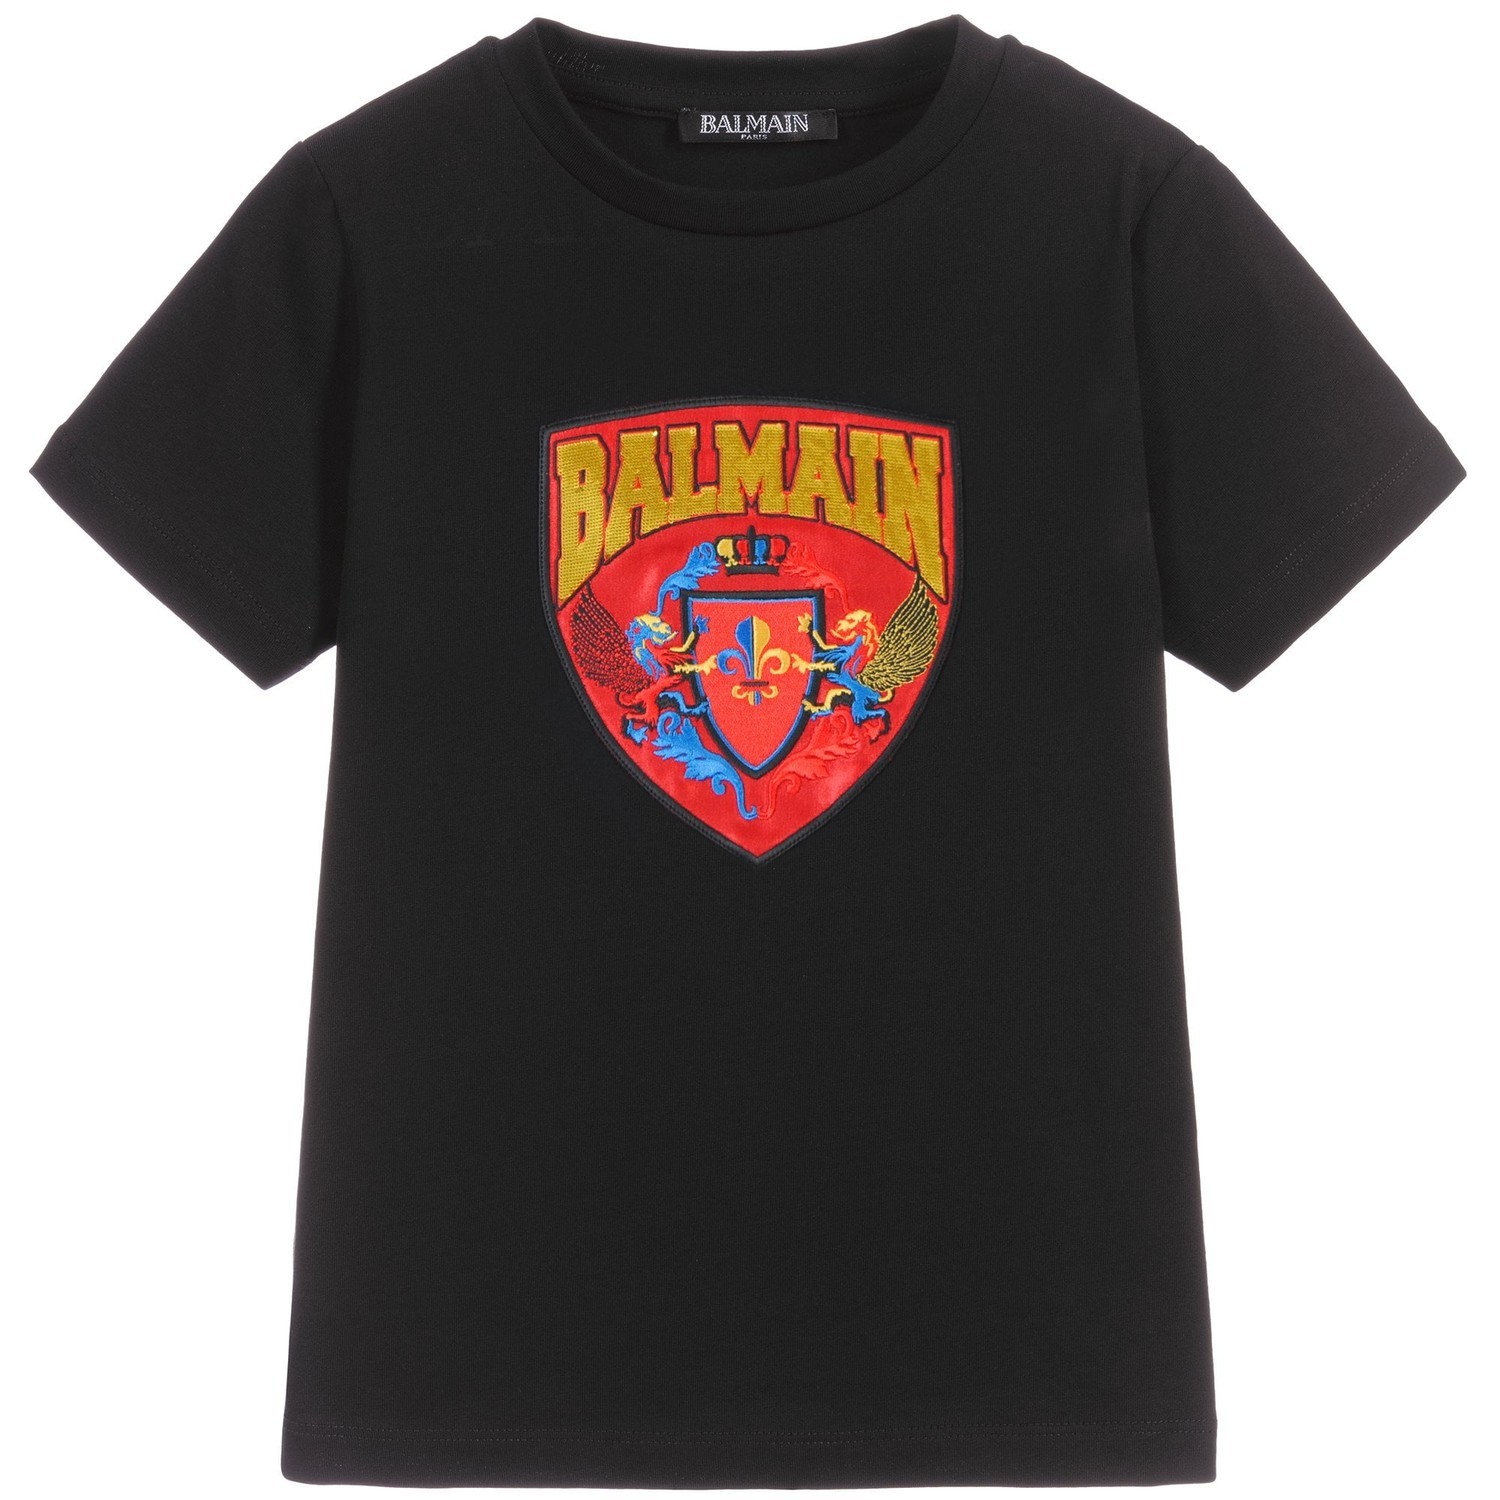 Balmain Boys Graphic Print T-shirt Black 1Y